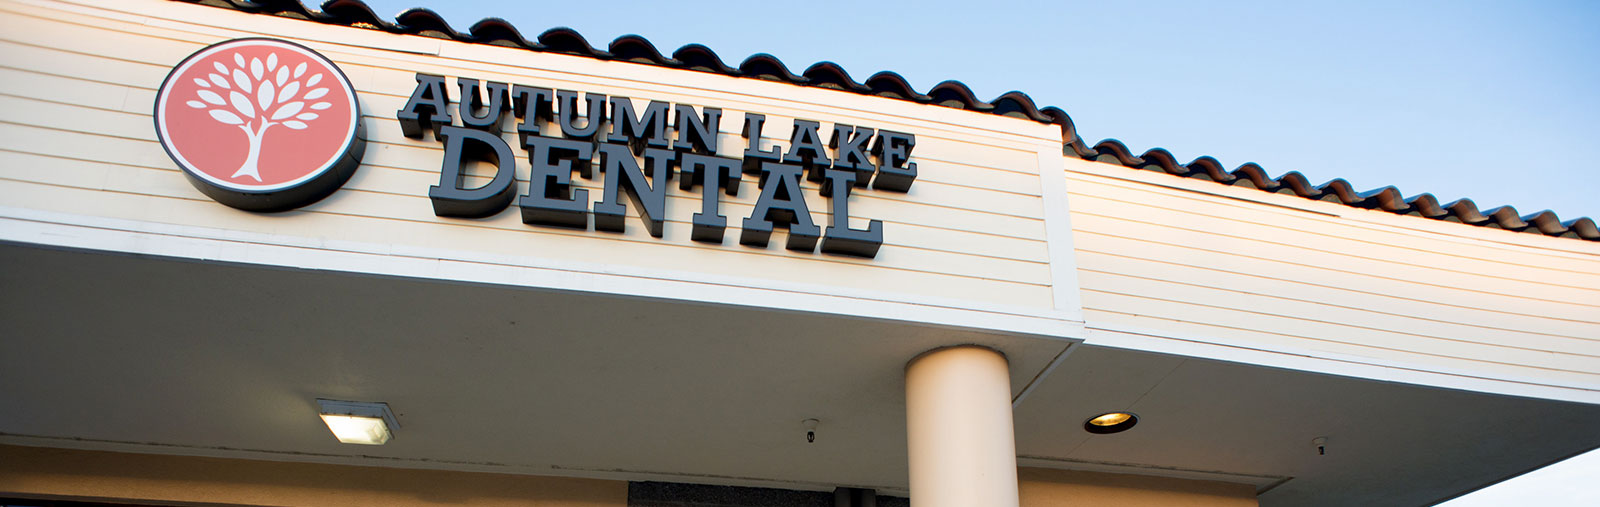 Autumn Lake Dental Services in Oakley CA